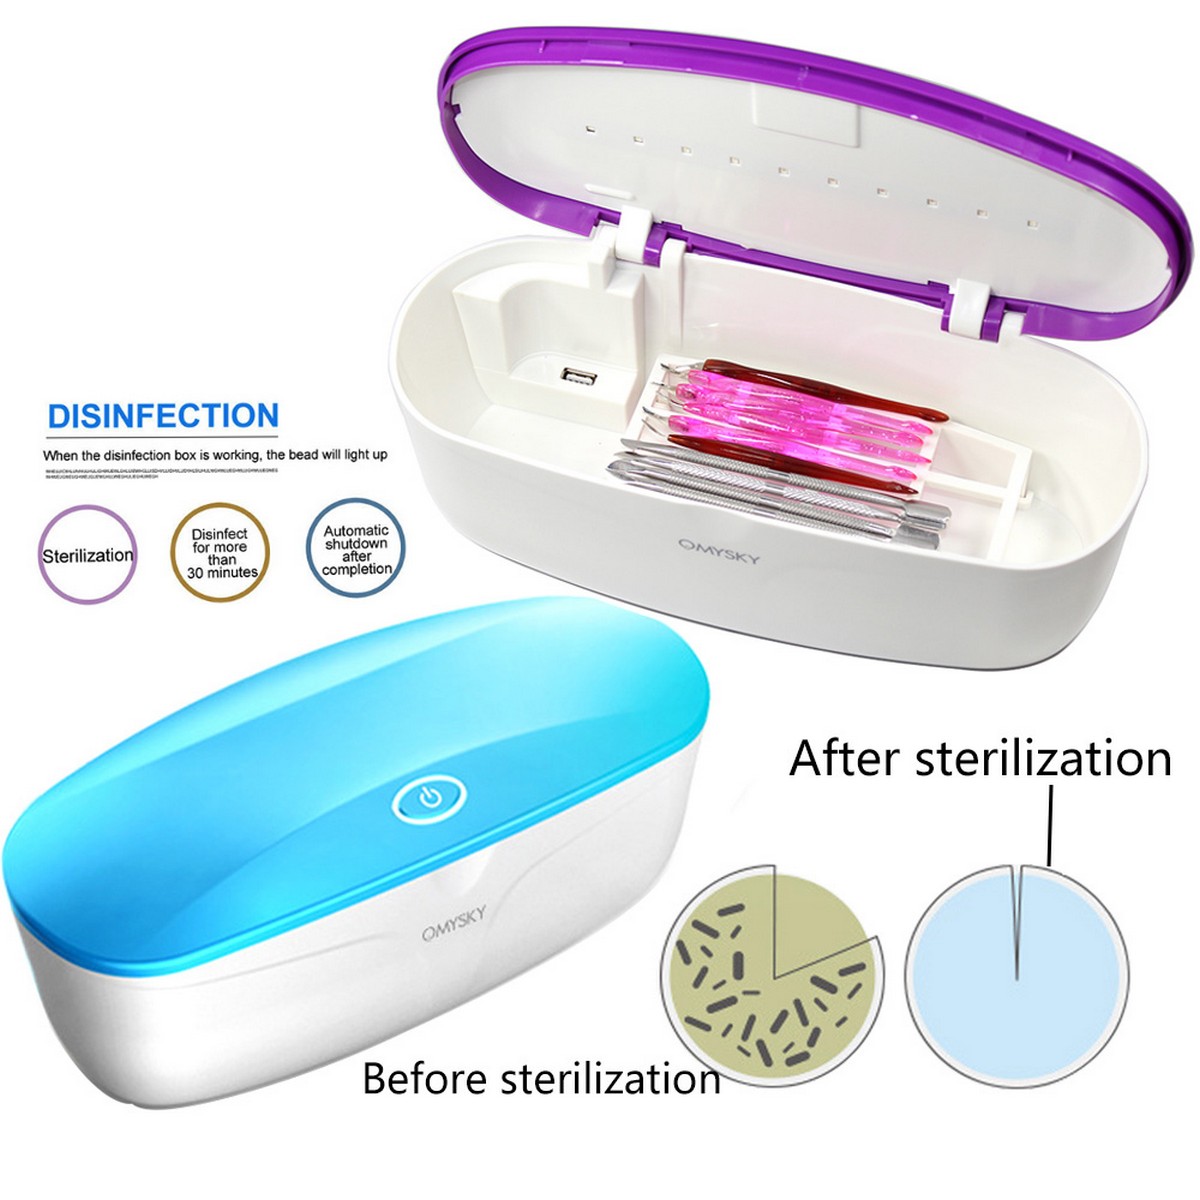 sterilisation box for disinfection